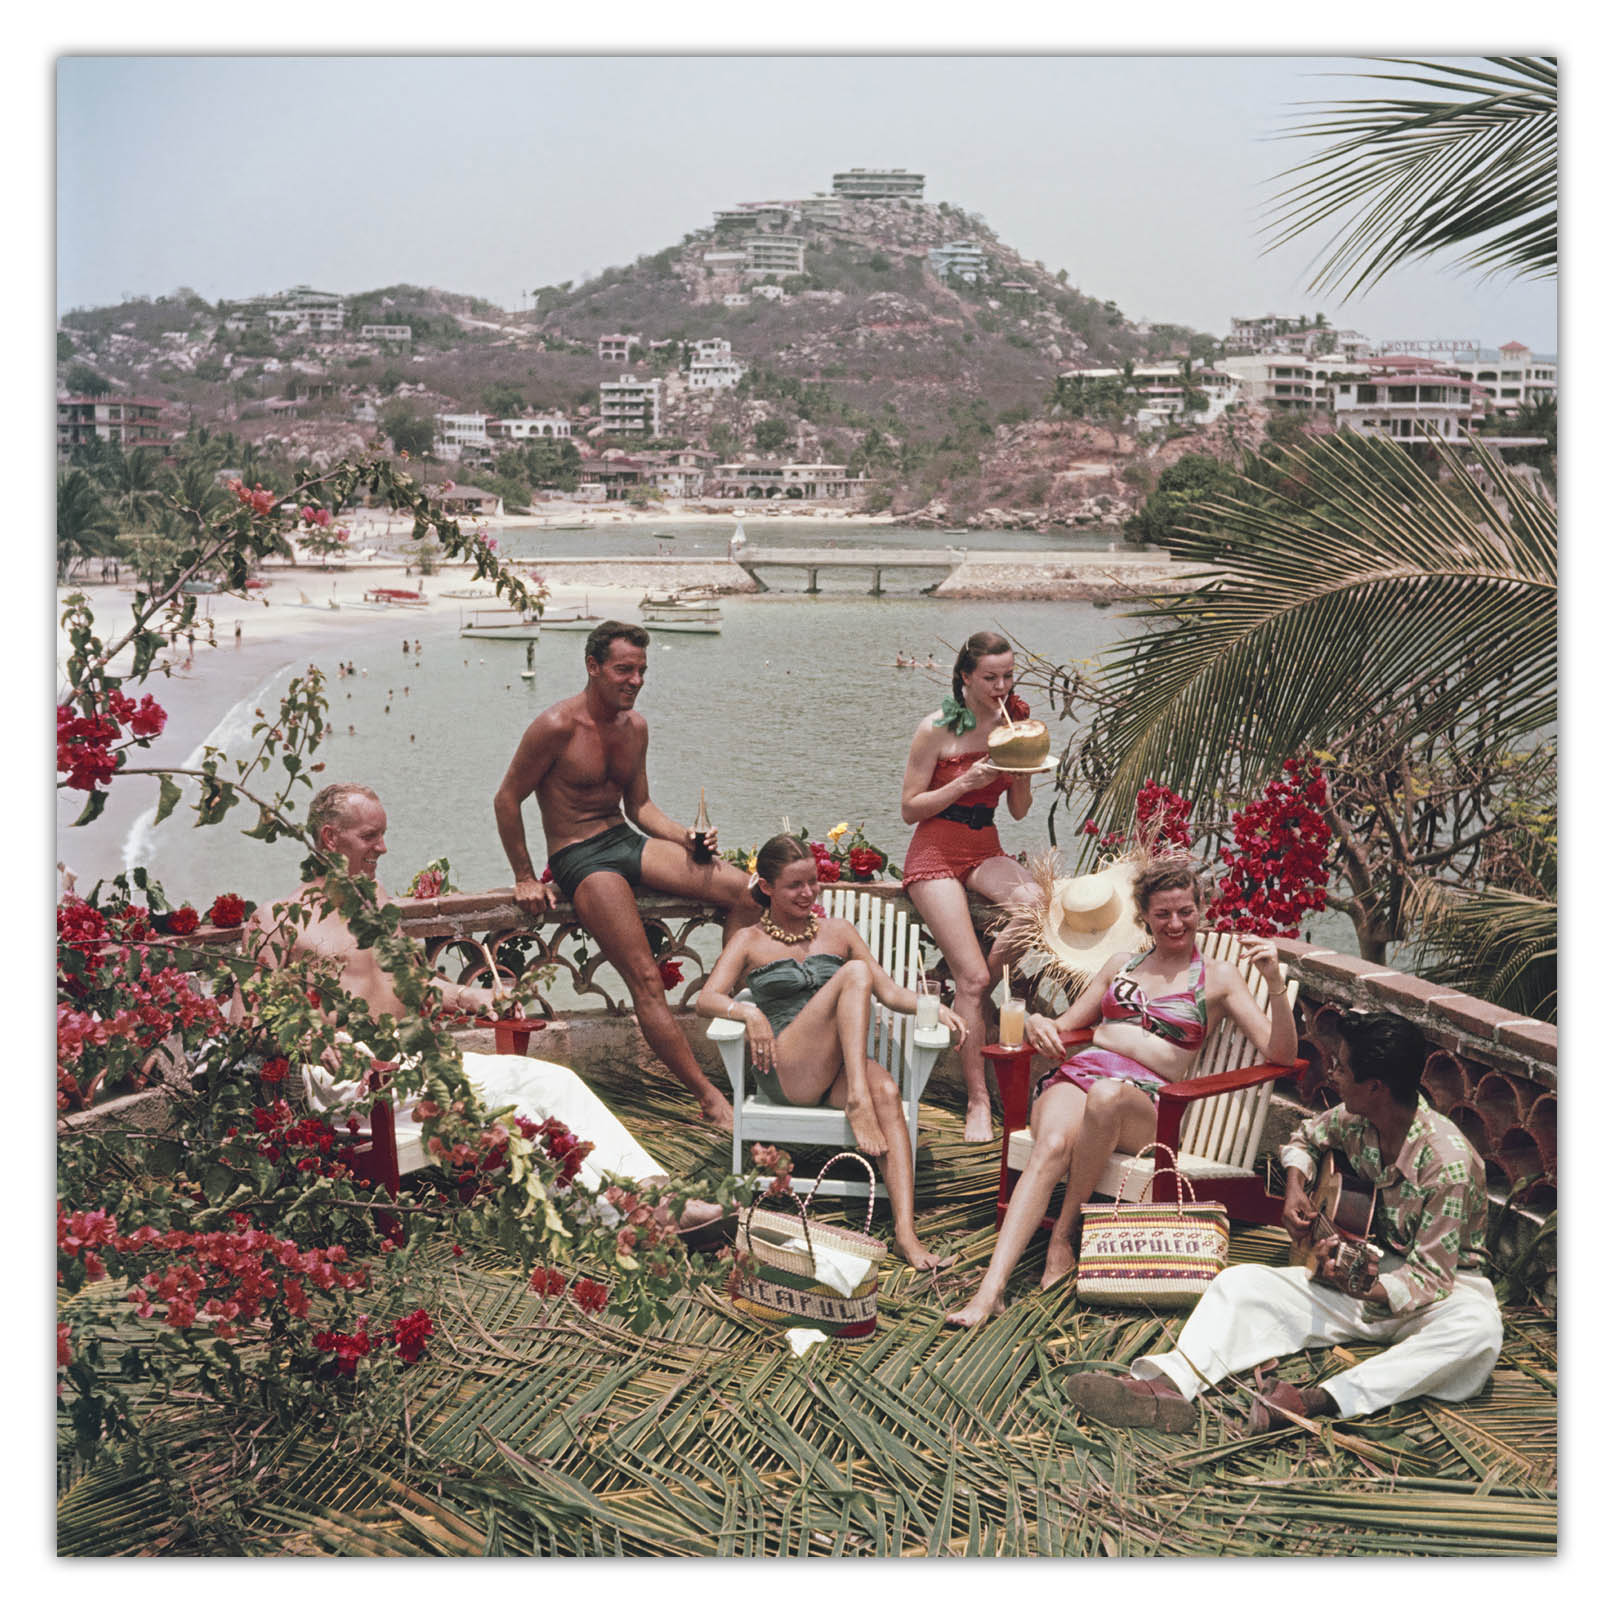 Acapulco Afternoon by Slim Aarons